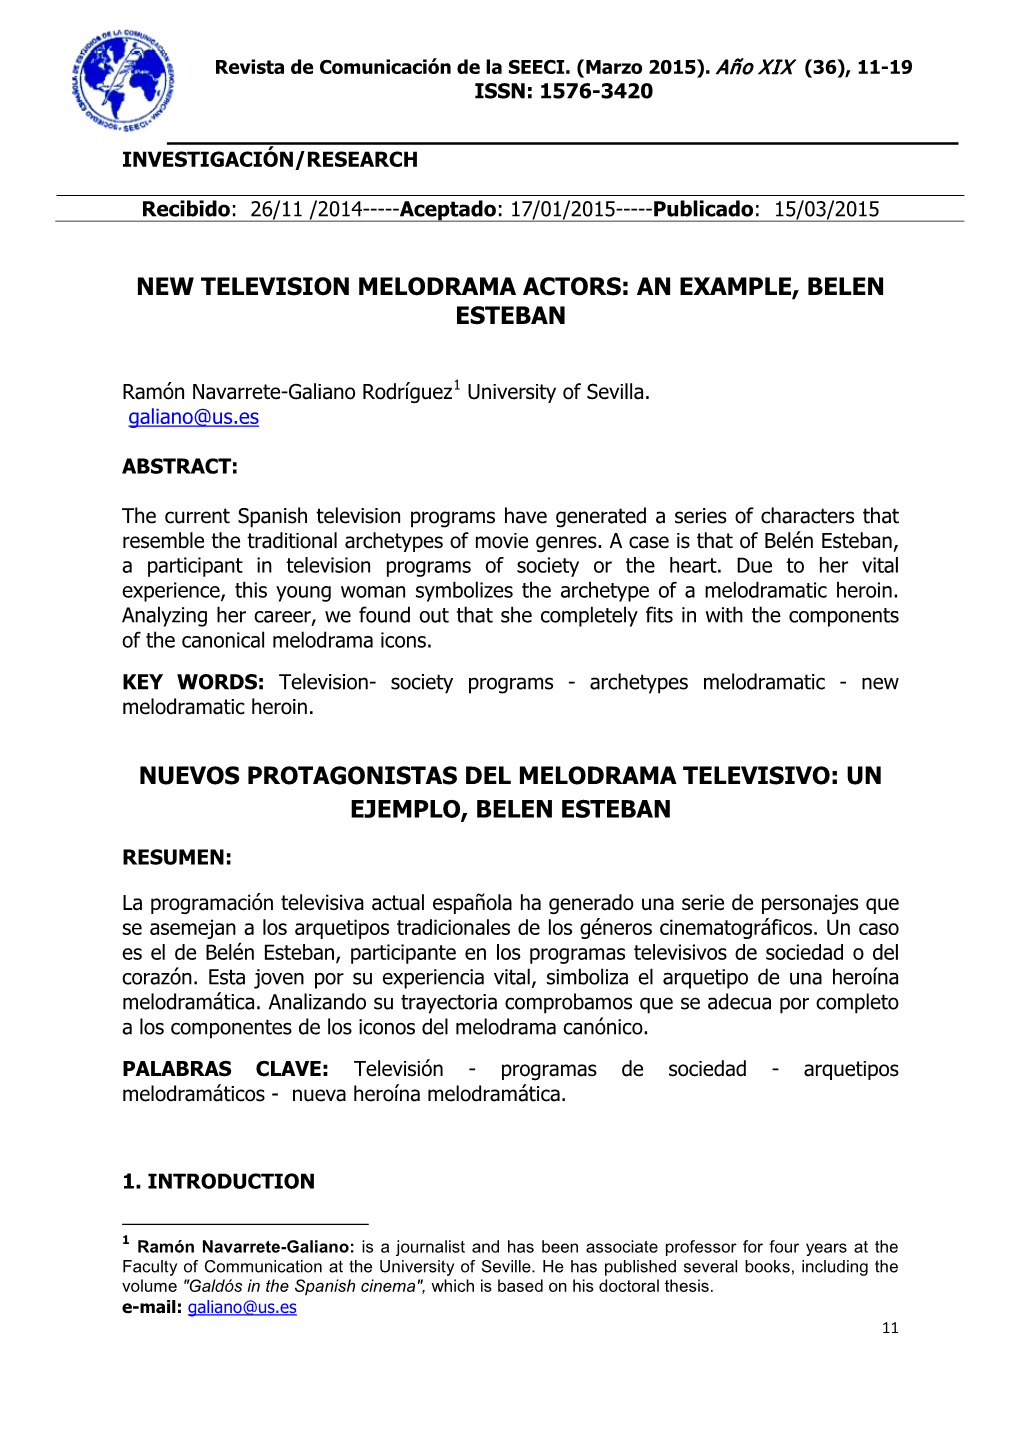 New Television Melodrama Actors: an Example, Belen Esteban